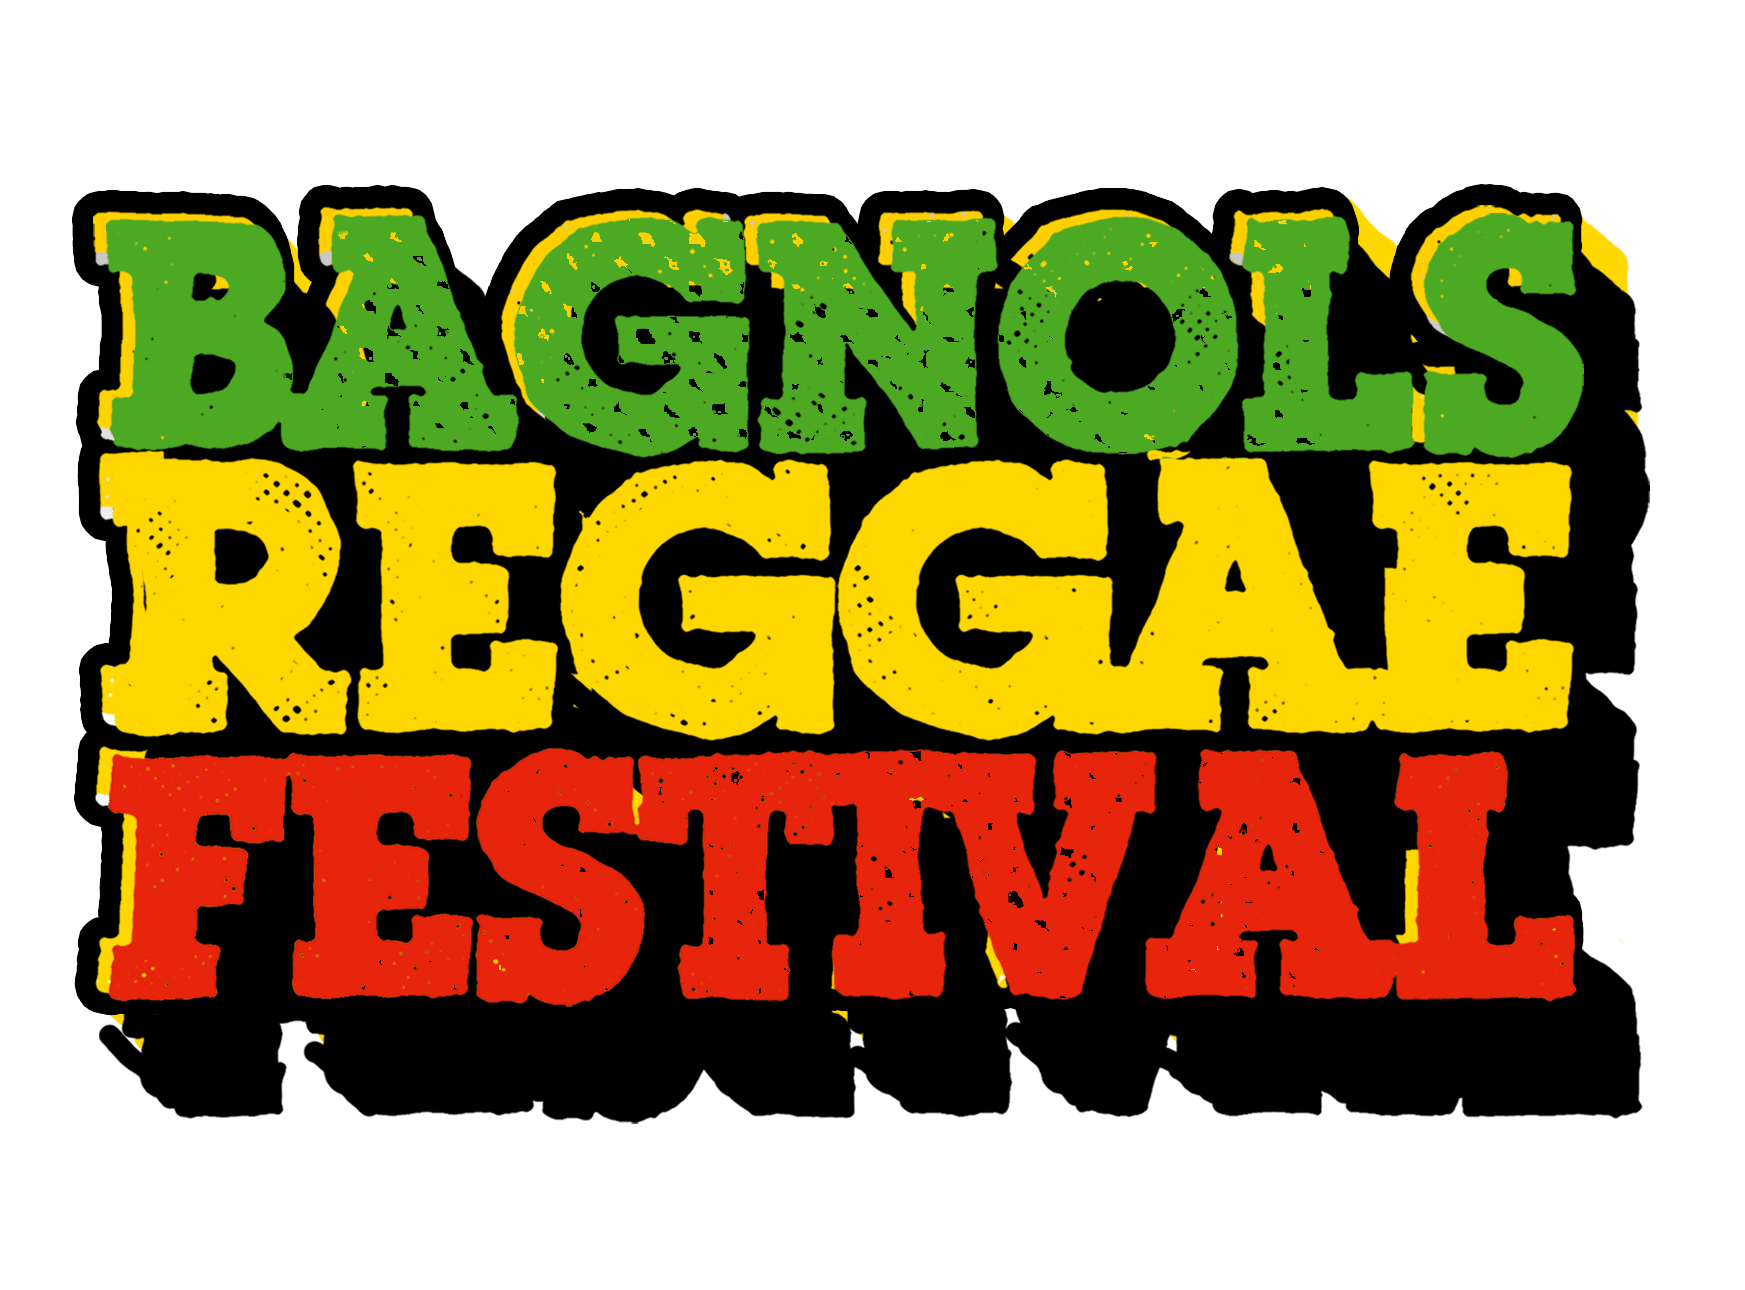 Bagnols Reggae Festival